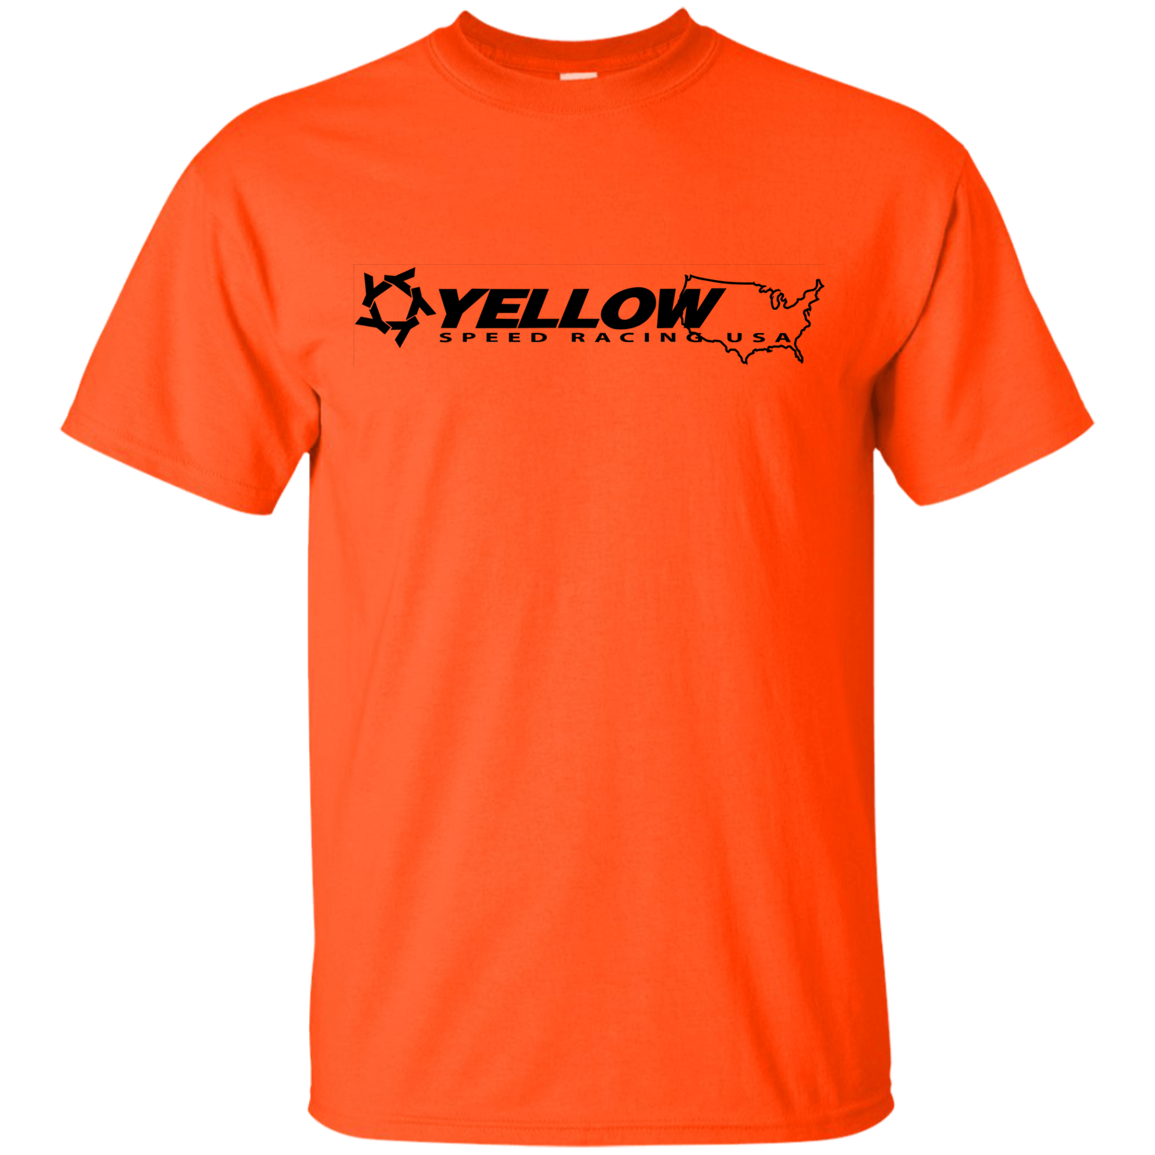 Yellow Speed Racing USA T-Shirt